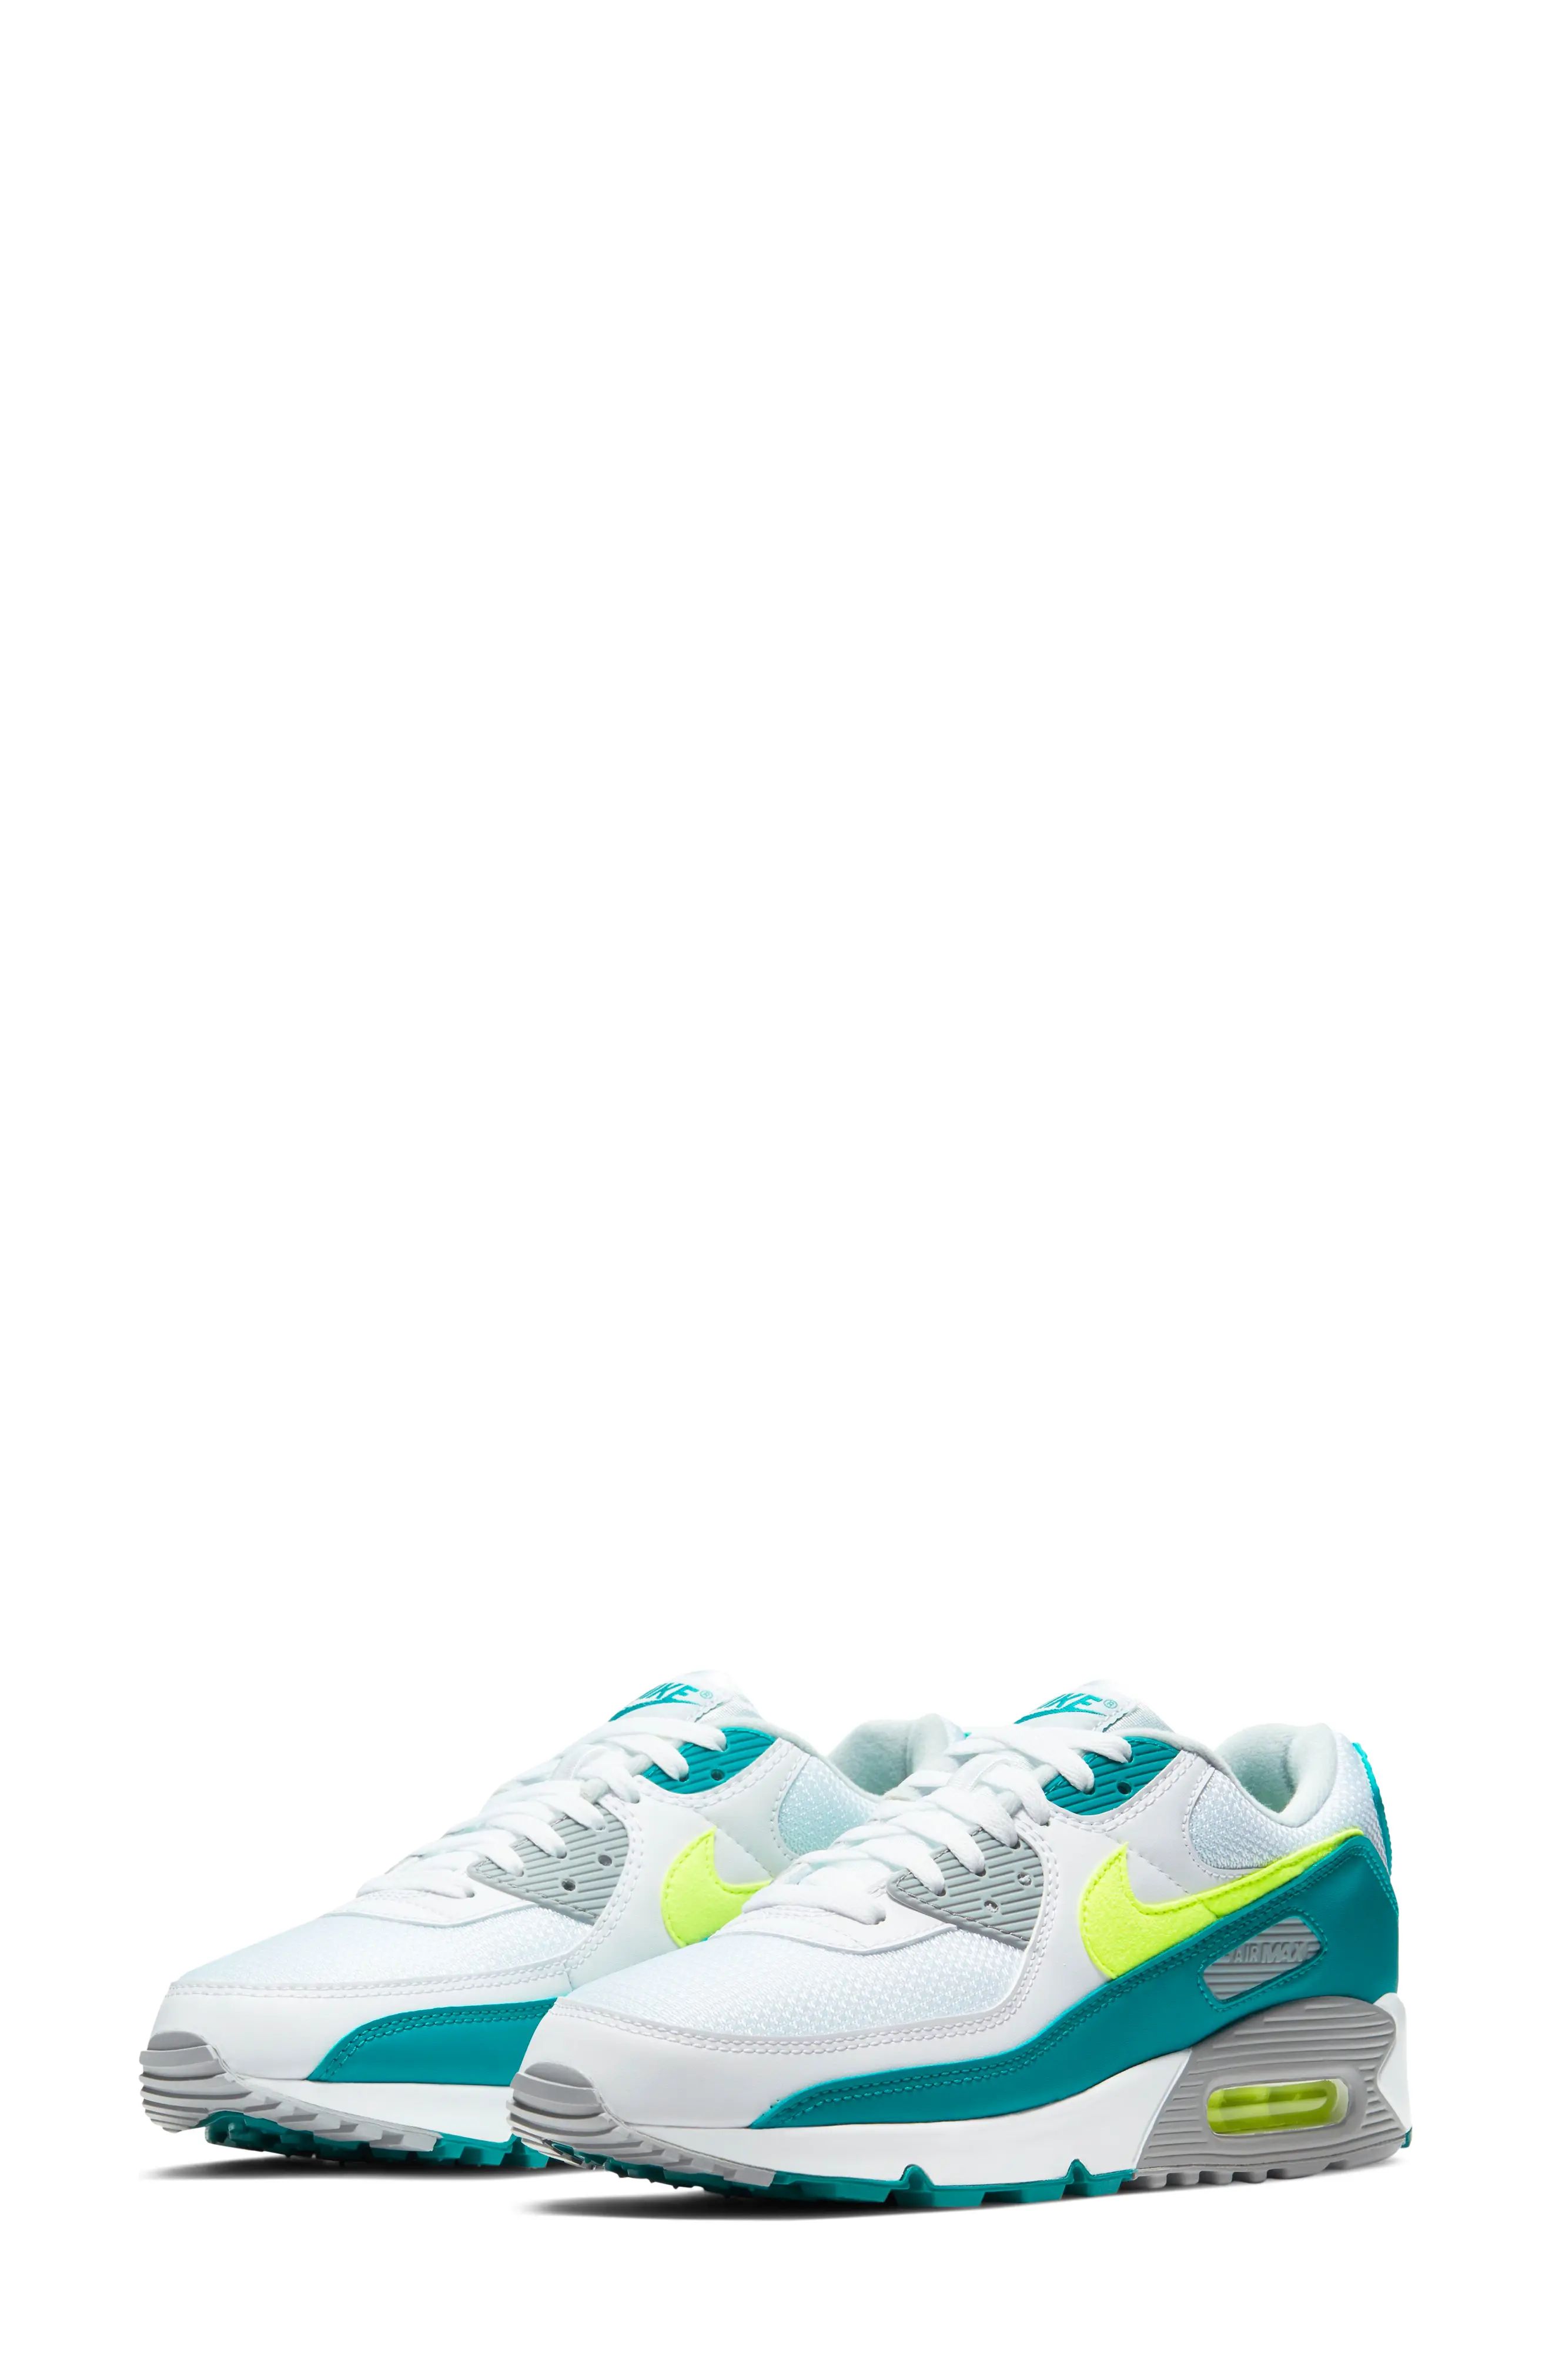 Nike Air Max 90 Sneaker, Size 7 Women's - White | Nordstrom